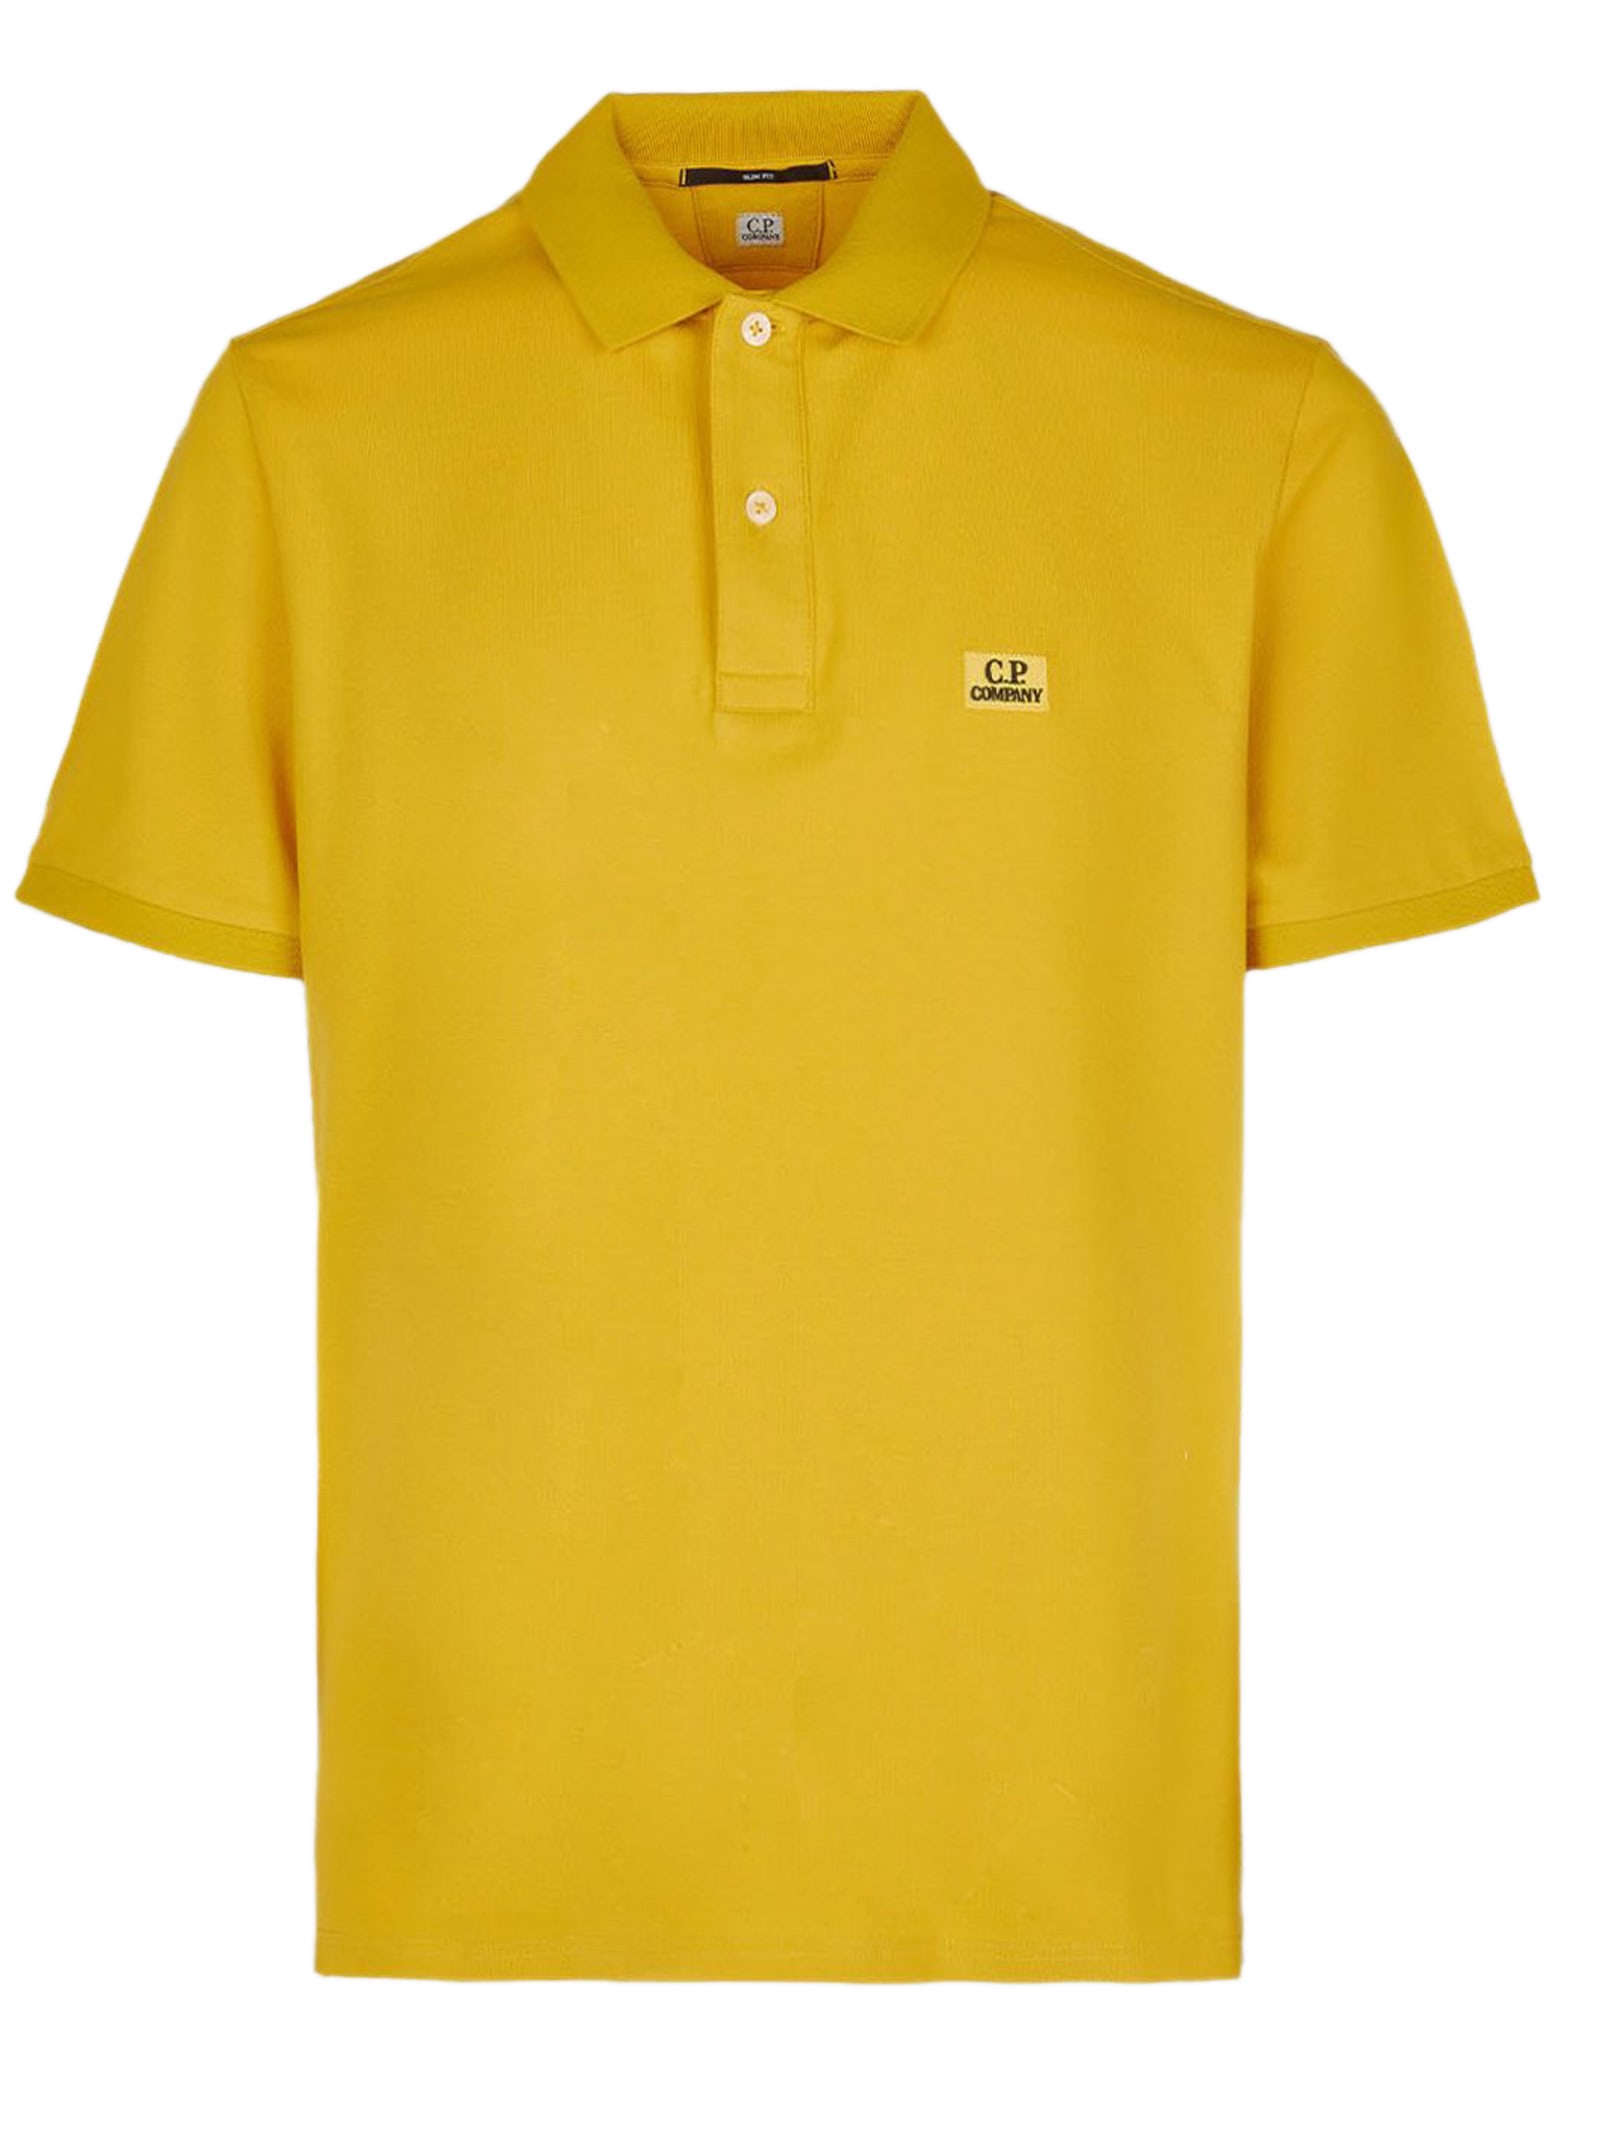 C.P. Company Yellow Stretch Pique Slim Fit Logo Polo